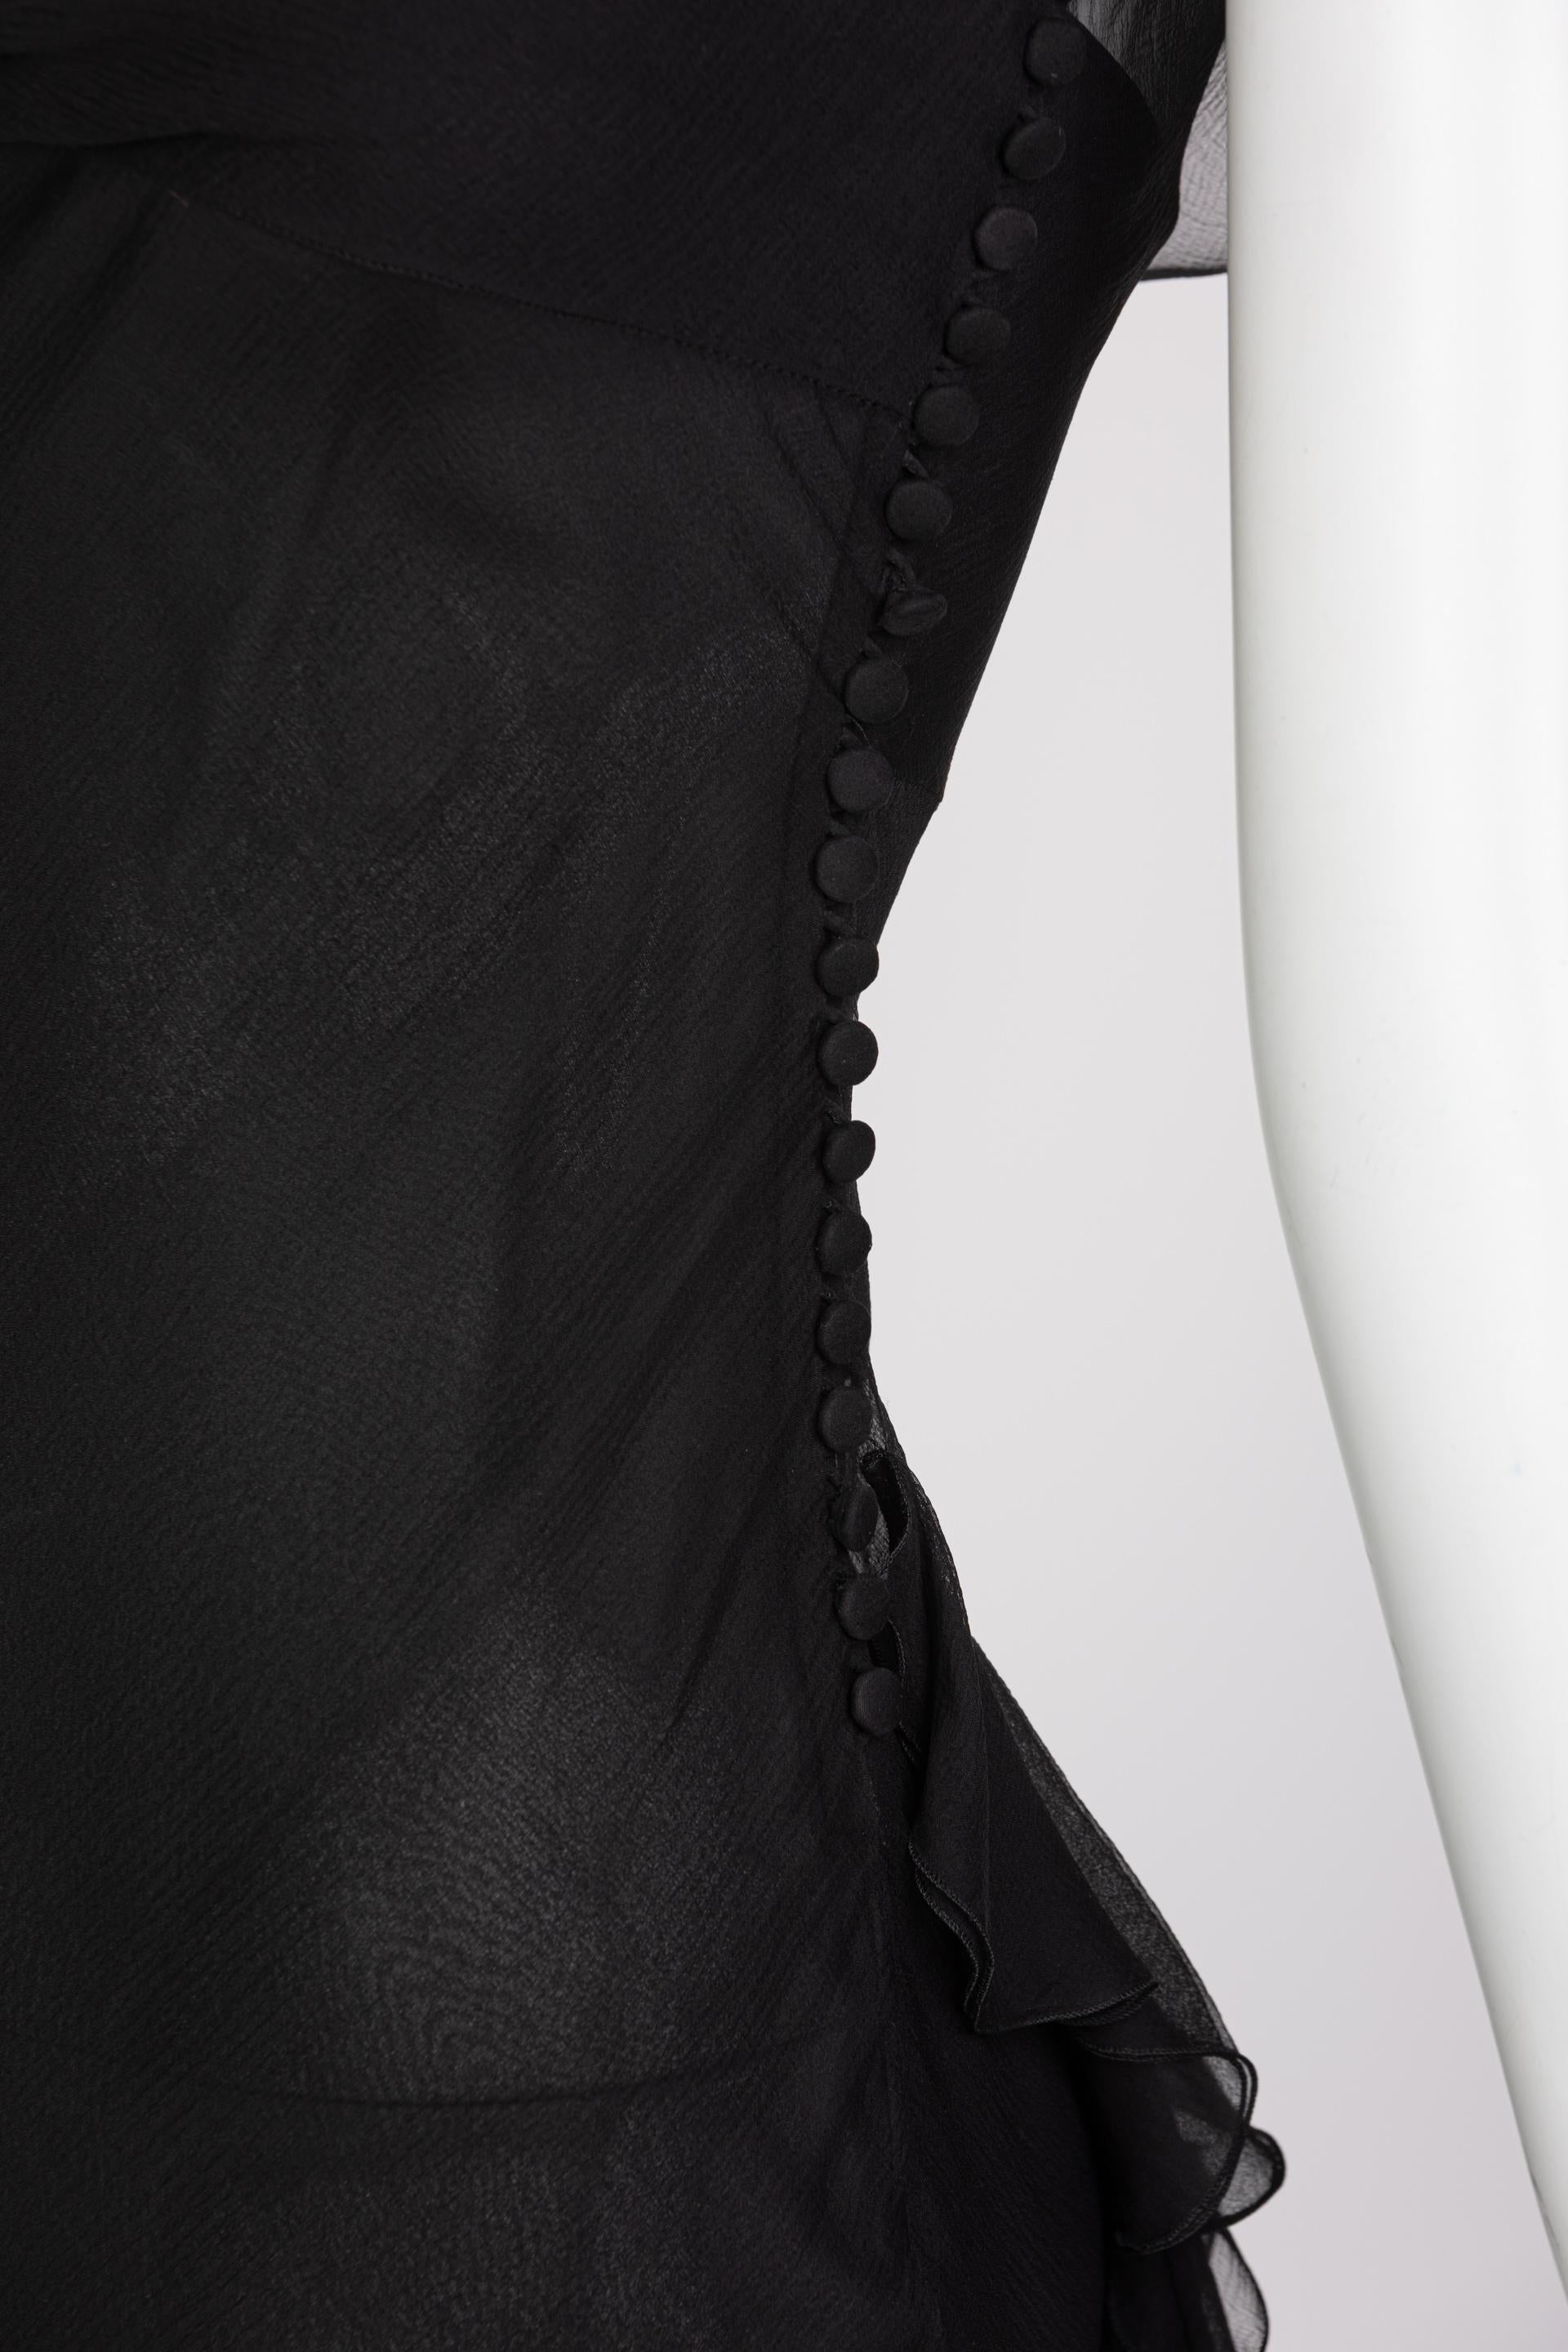 Christian Dior by Galliano Black Sheer Silk Sleeveless Dress 3